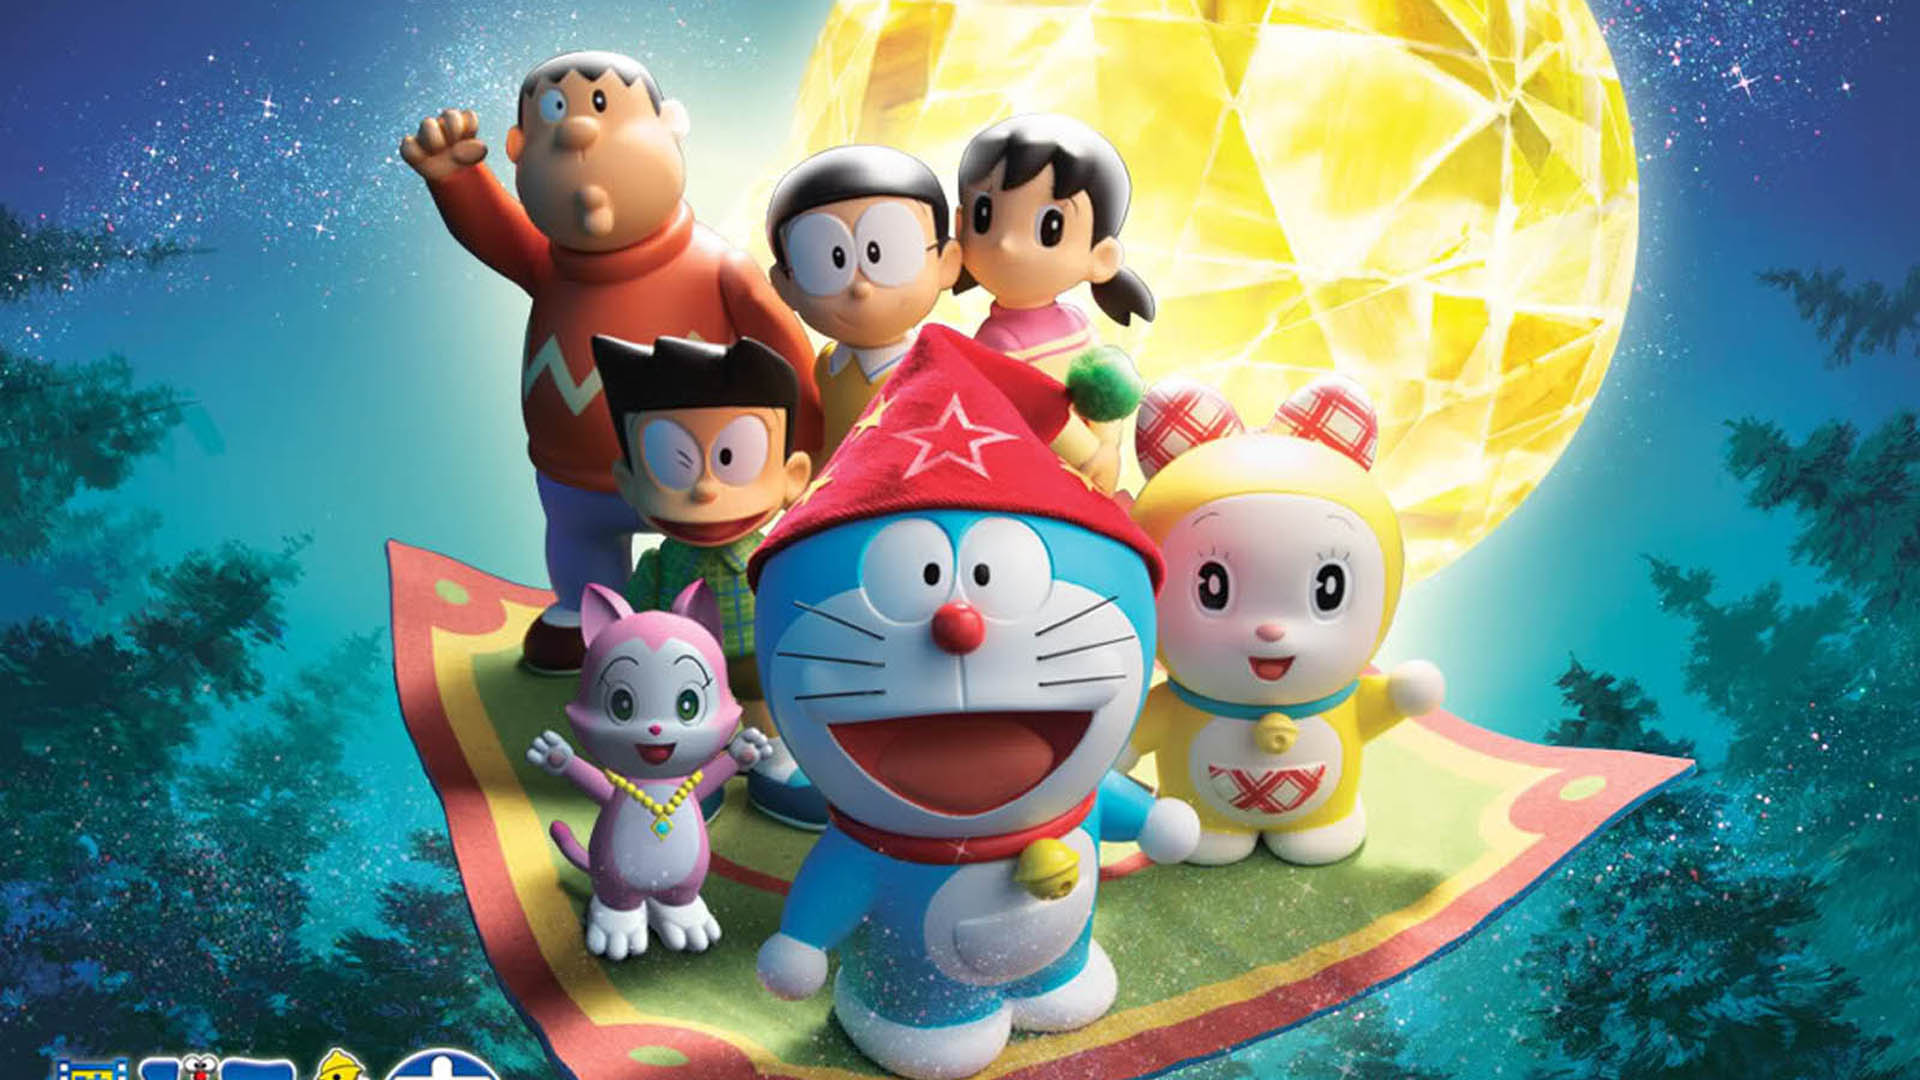 Doraemon Anime Tv 2005 Now